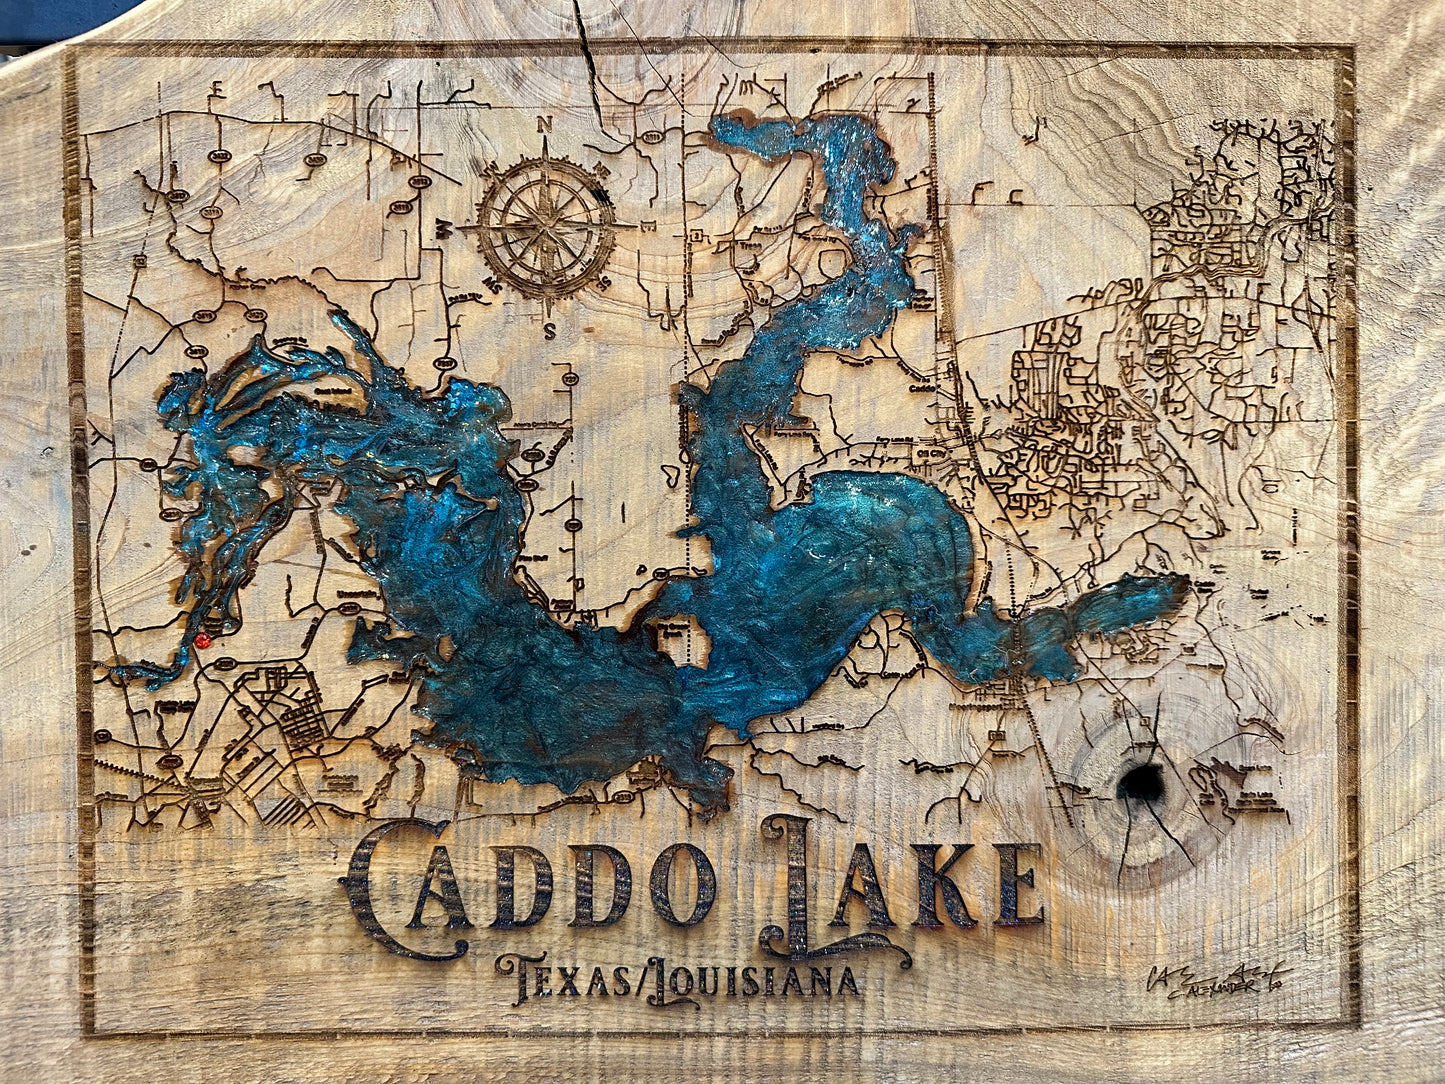 Caddo Lake Wood Engraving and Prints